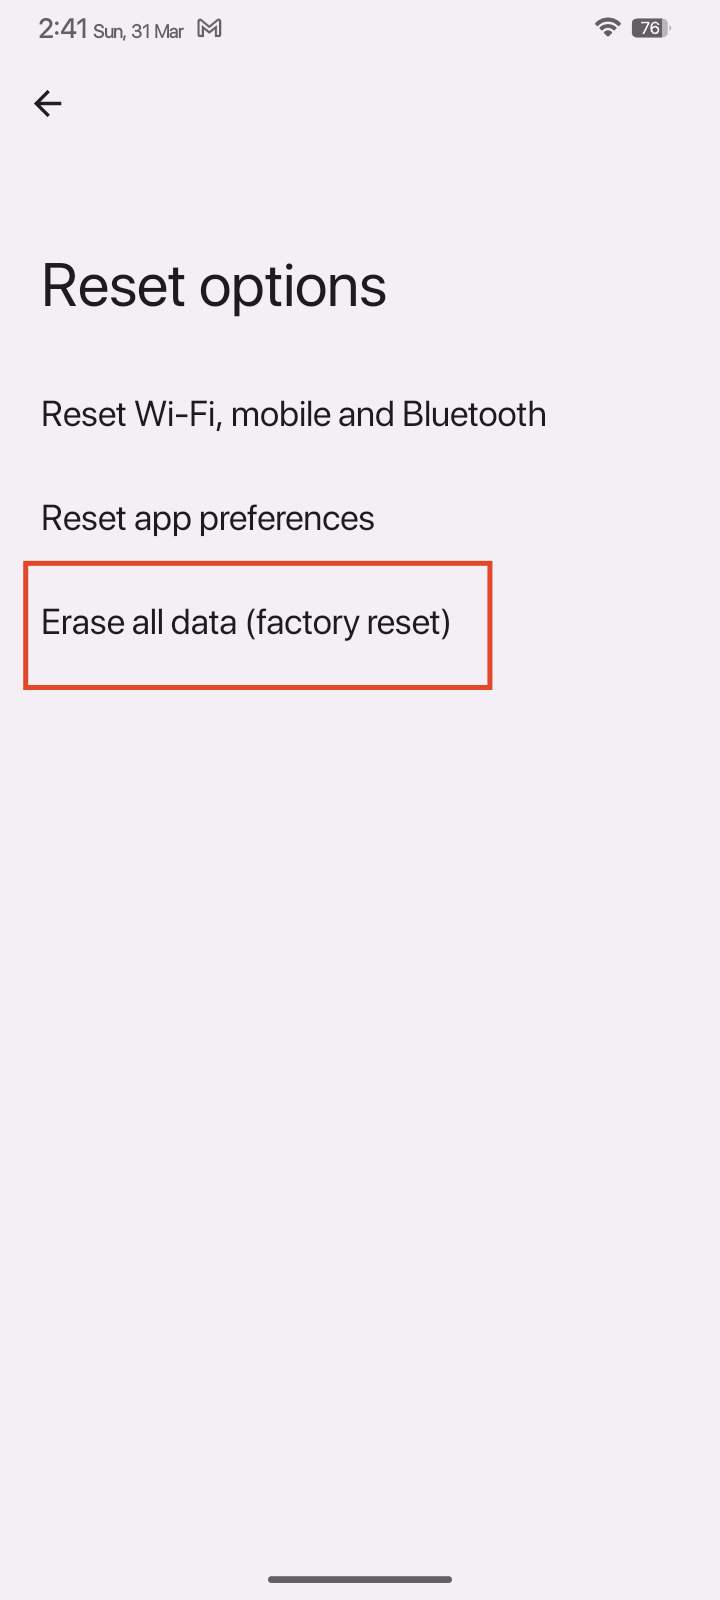 tap Erase all data (factory reset)